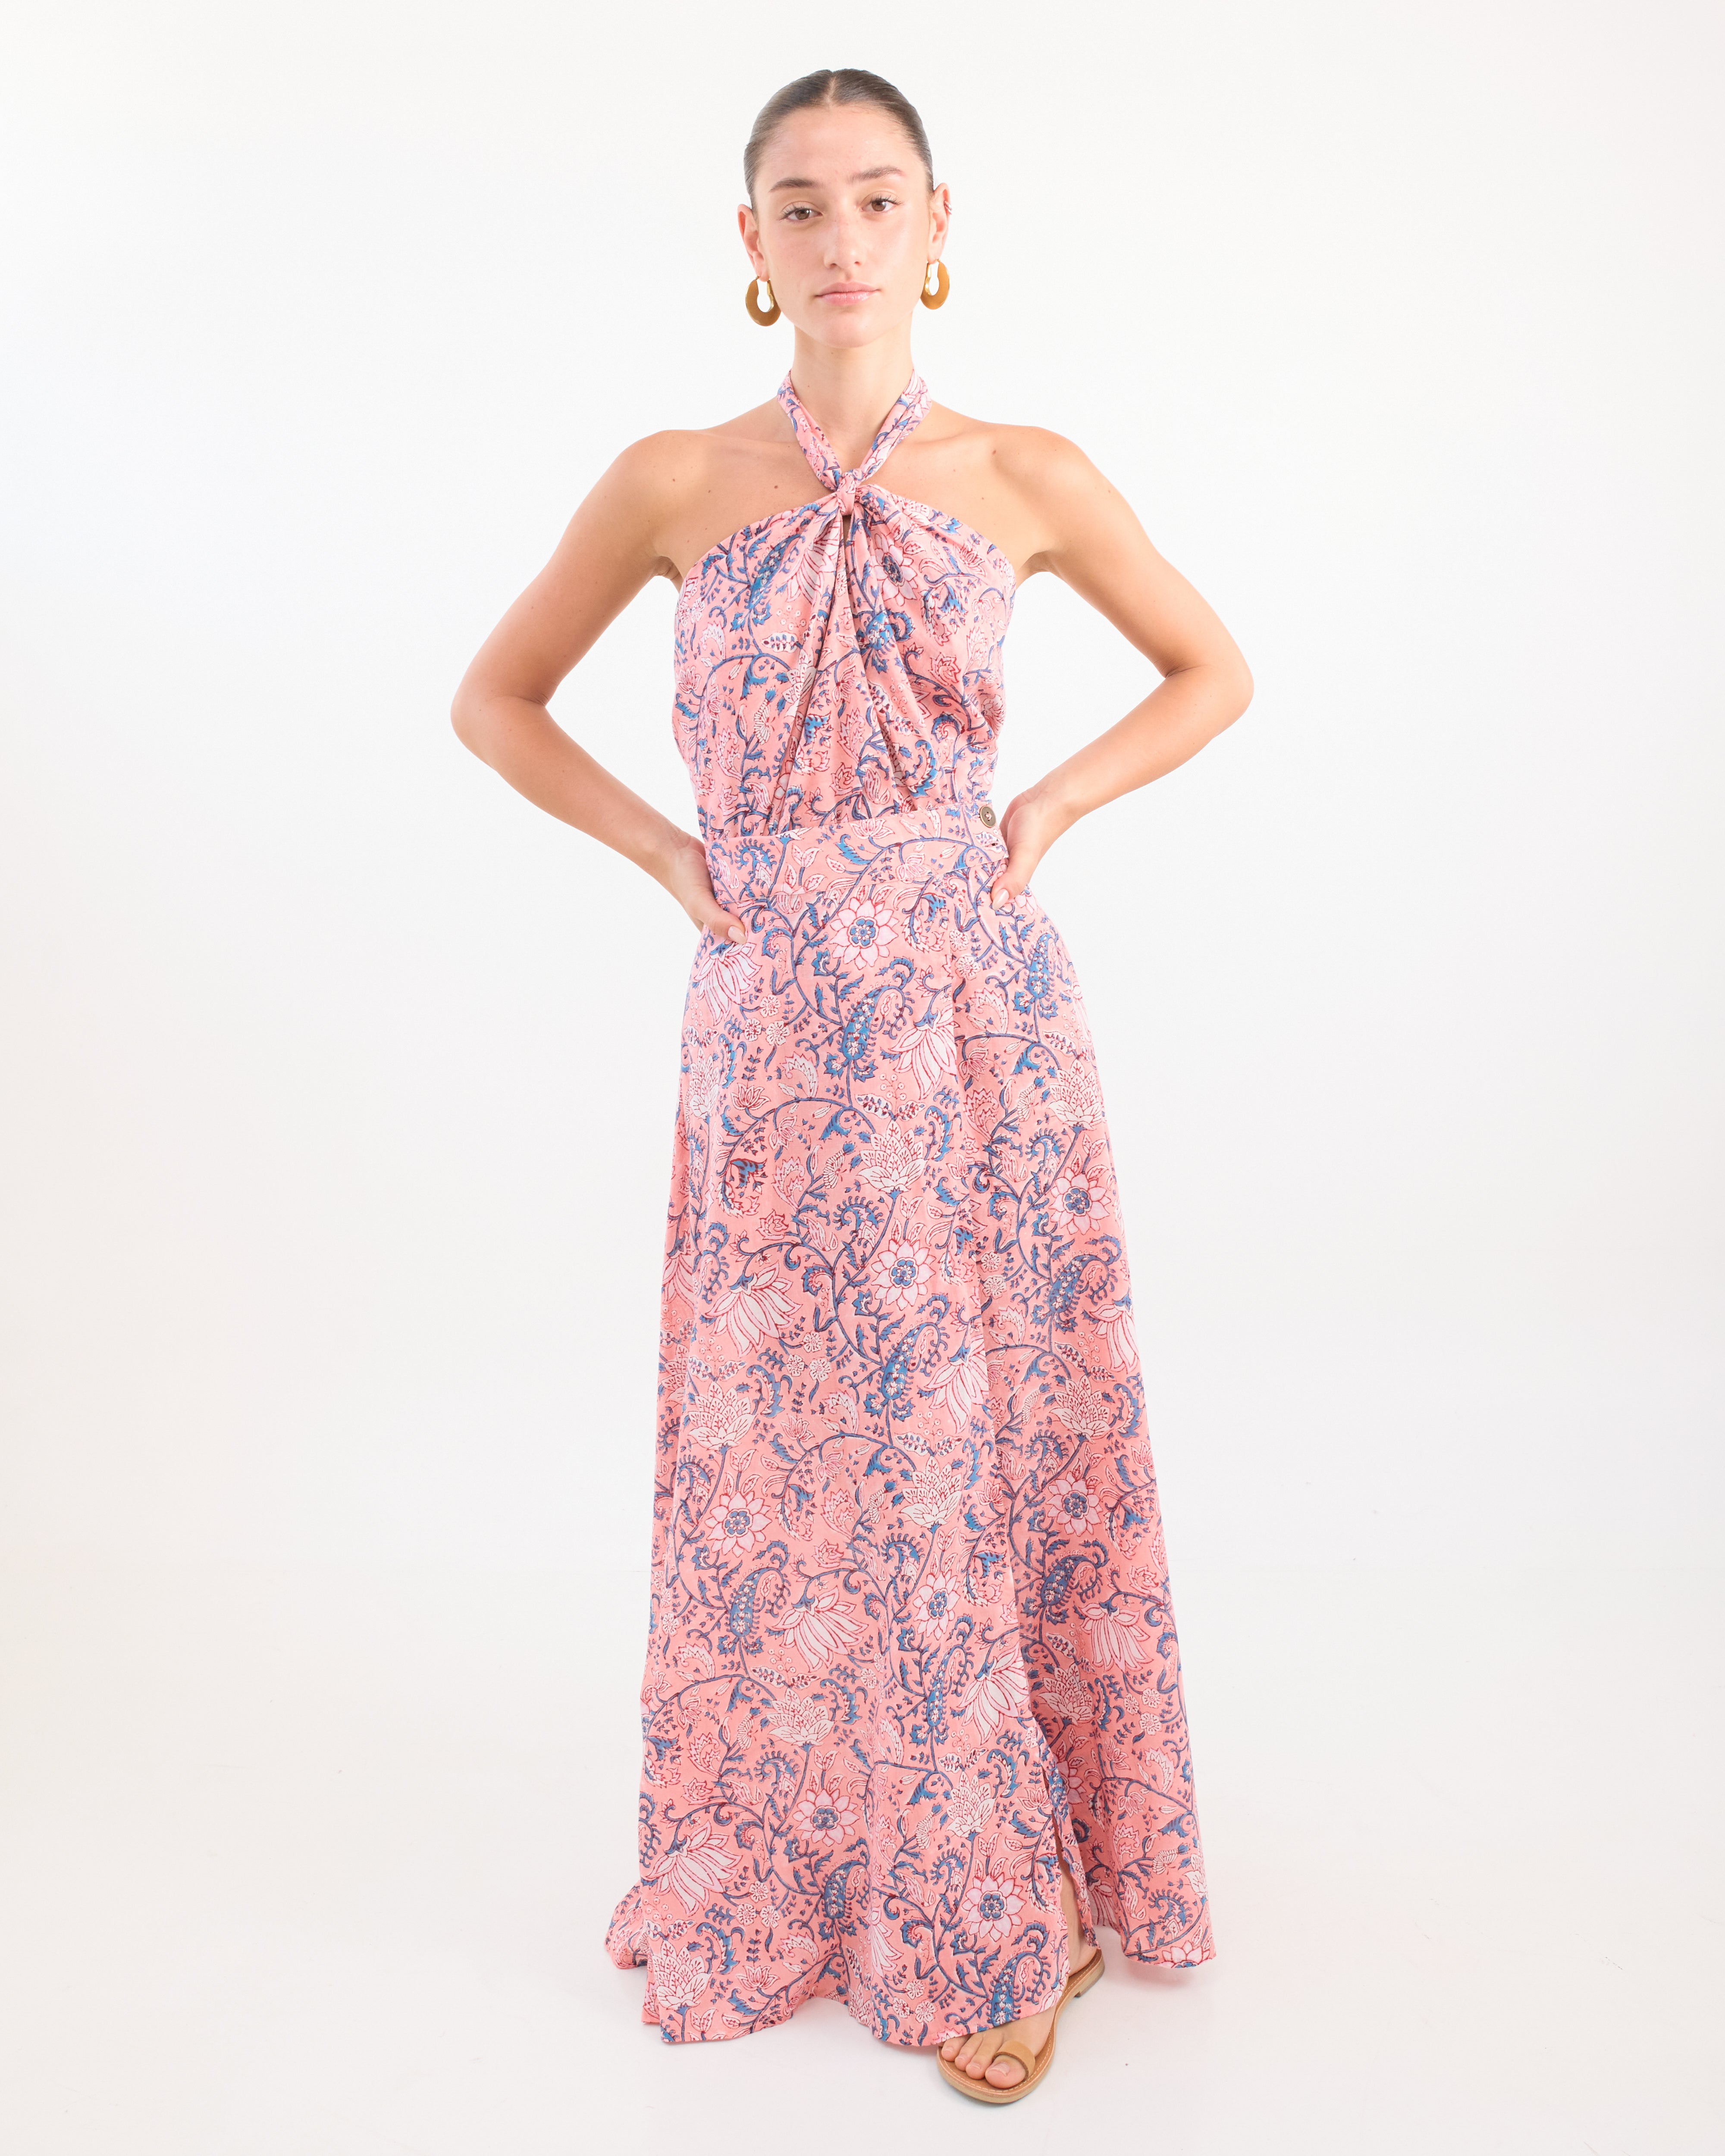 Camilla Maxi Skirt - Pink Blue Floral by Desert Queen